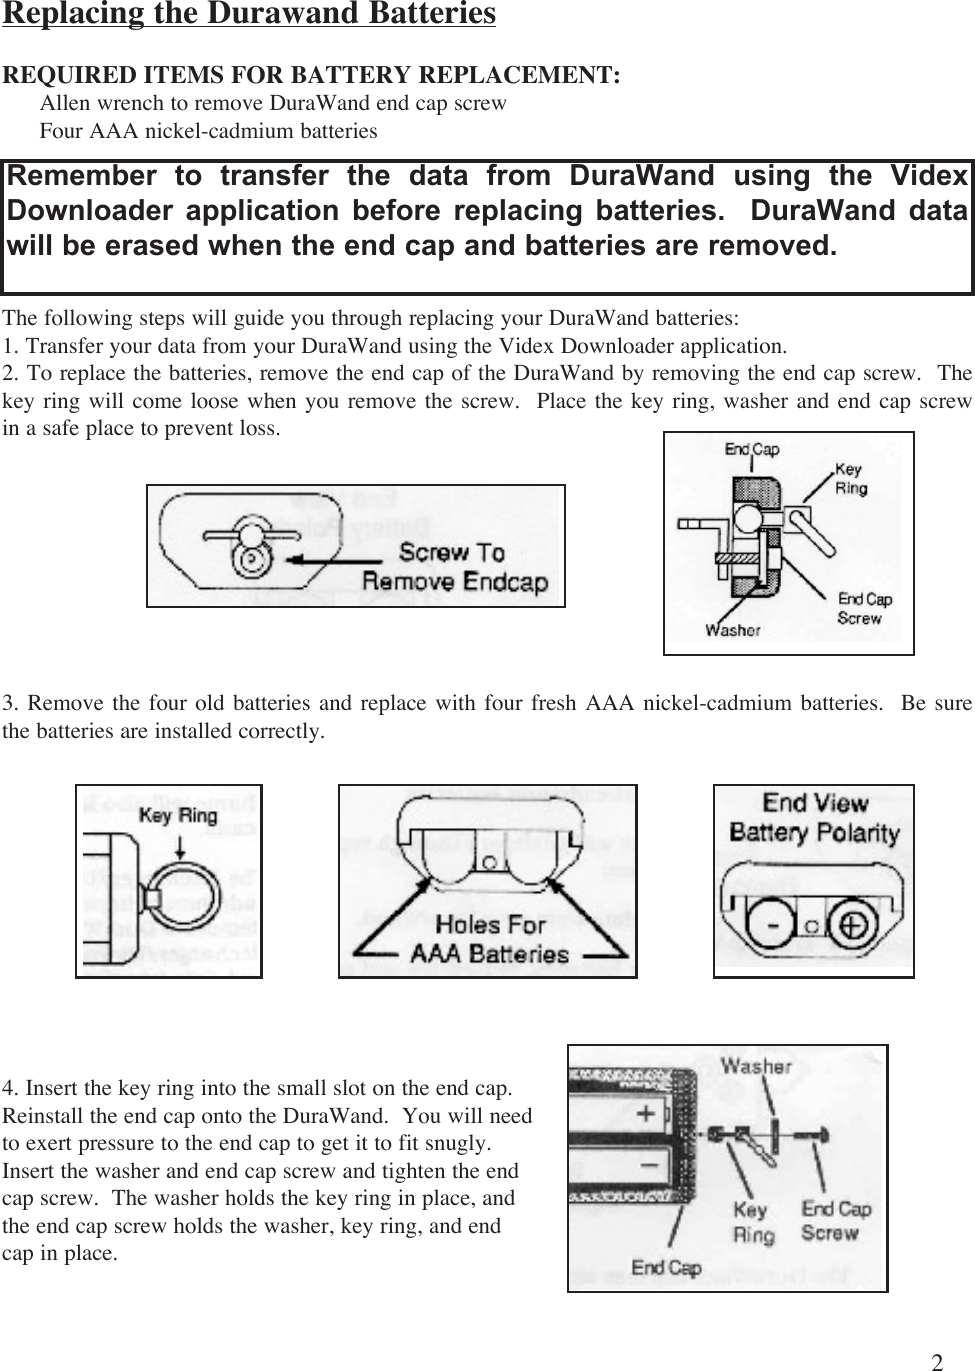 Page 3 of 8 - Keyspan Keyspan-Alexadria-Durawand-Portable-Scanner-Users-Manual--2  Keyspan-alexadria-durawand-portable-scanner-users-manual